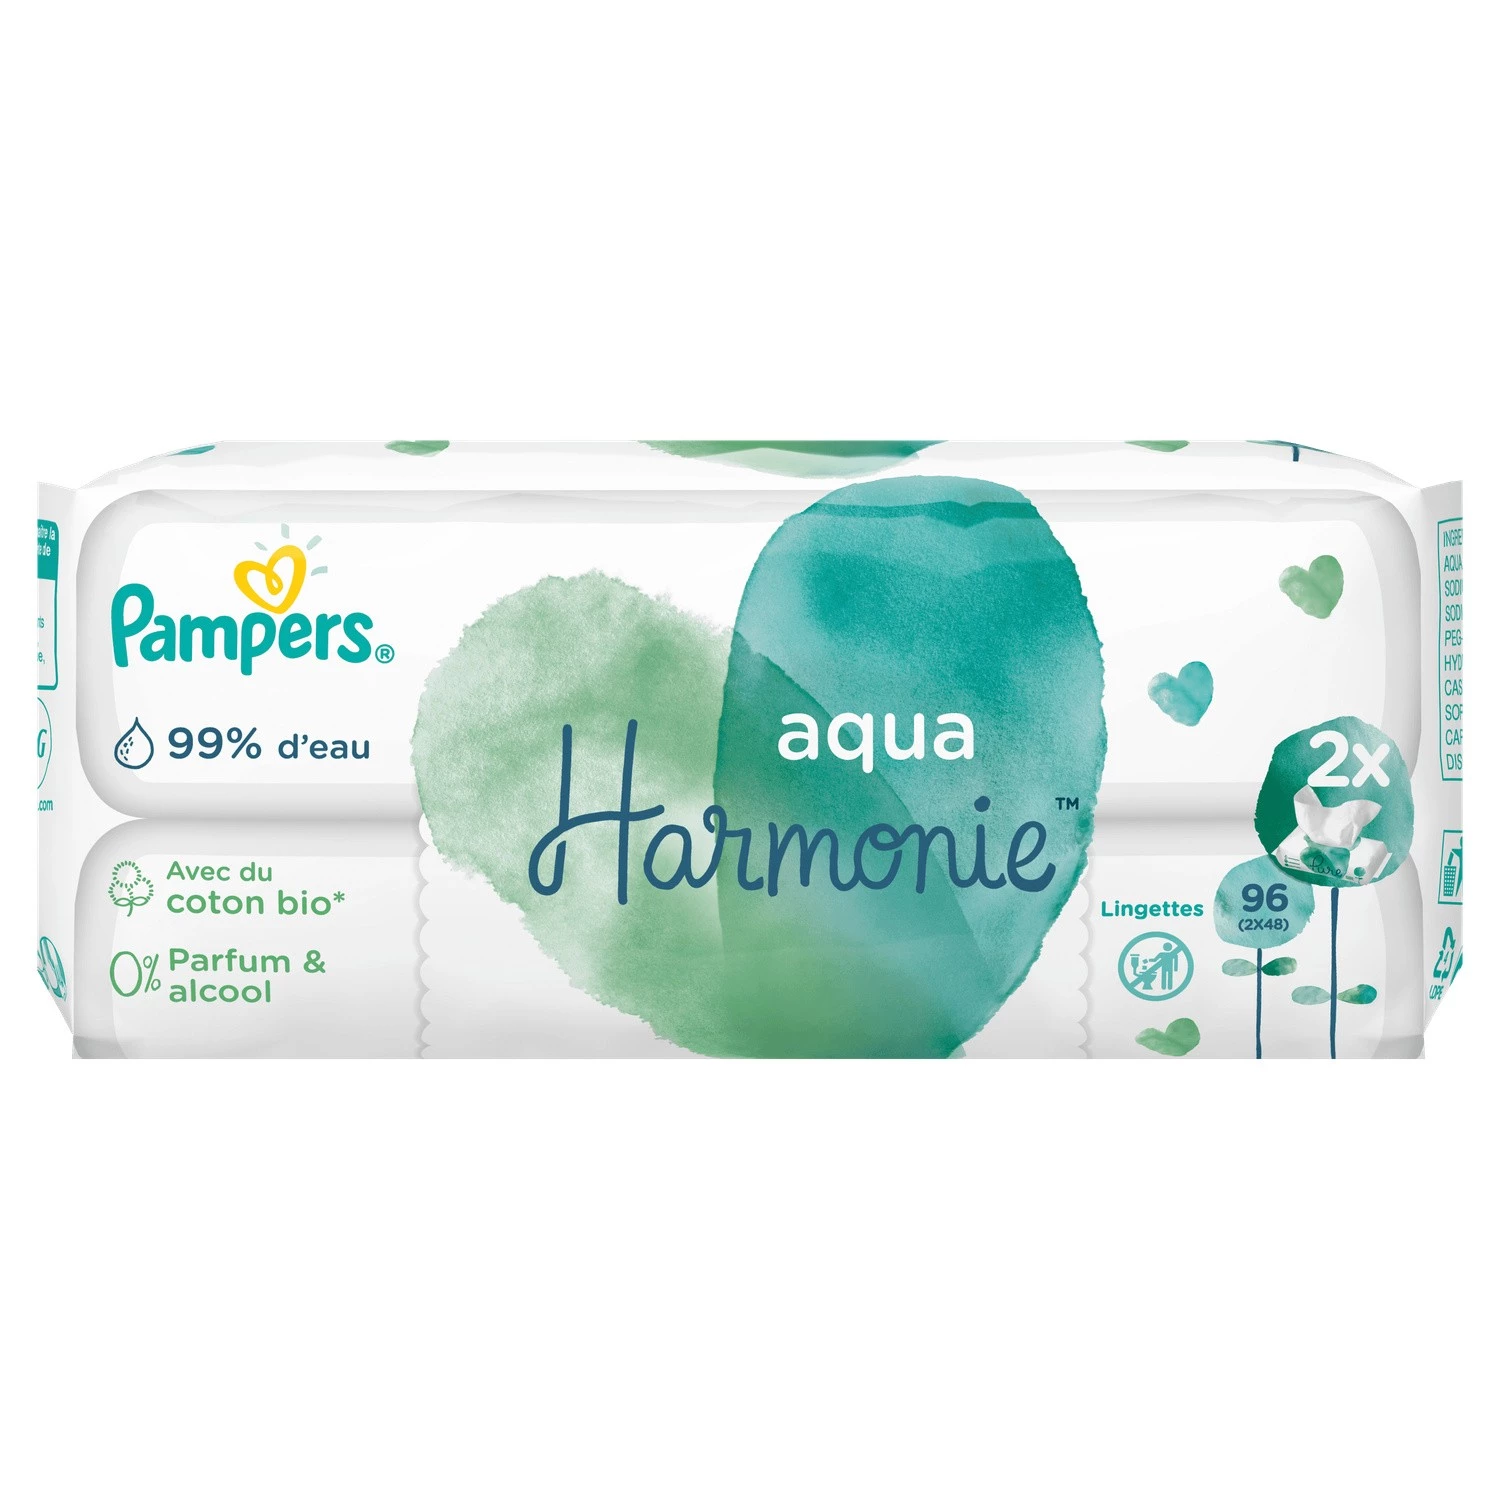 Lingettes aqua harmonie 2x48 - PAMPERS wholesaler